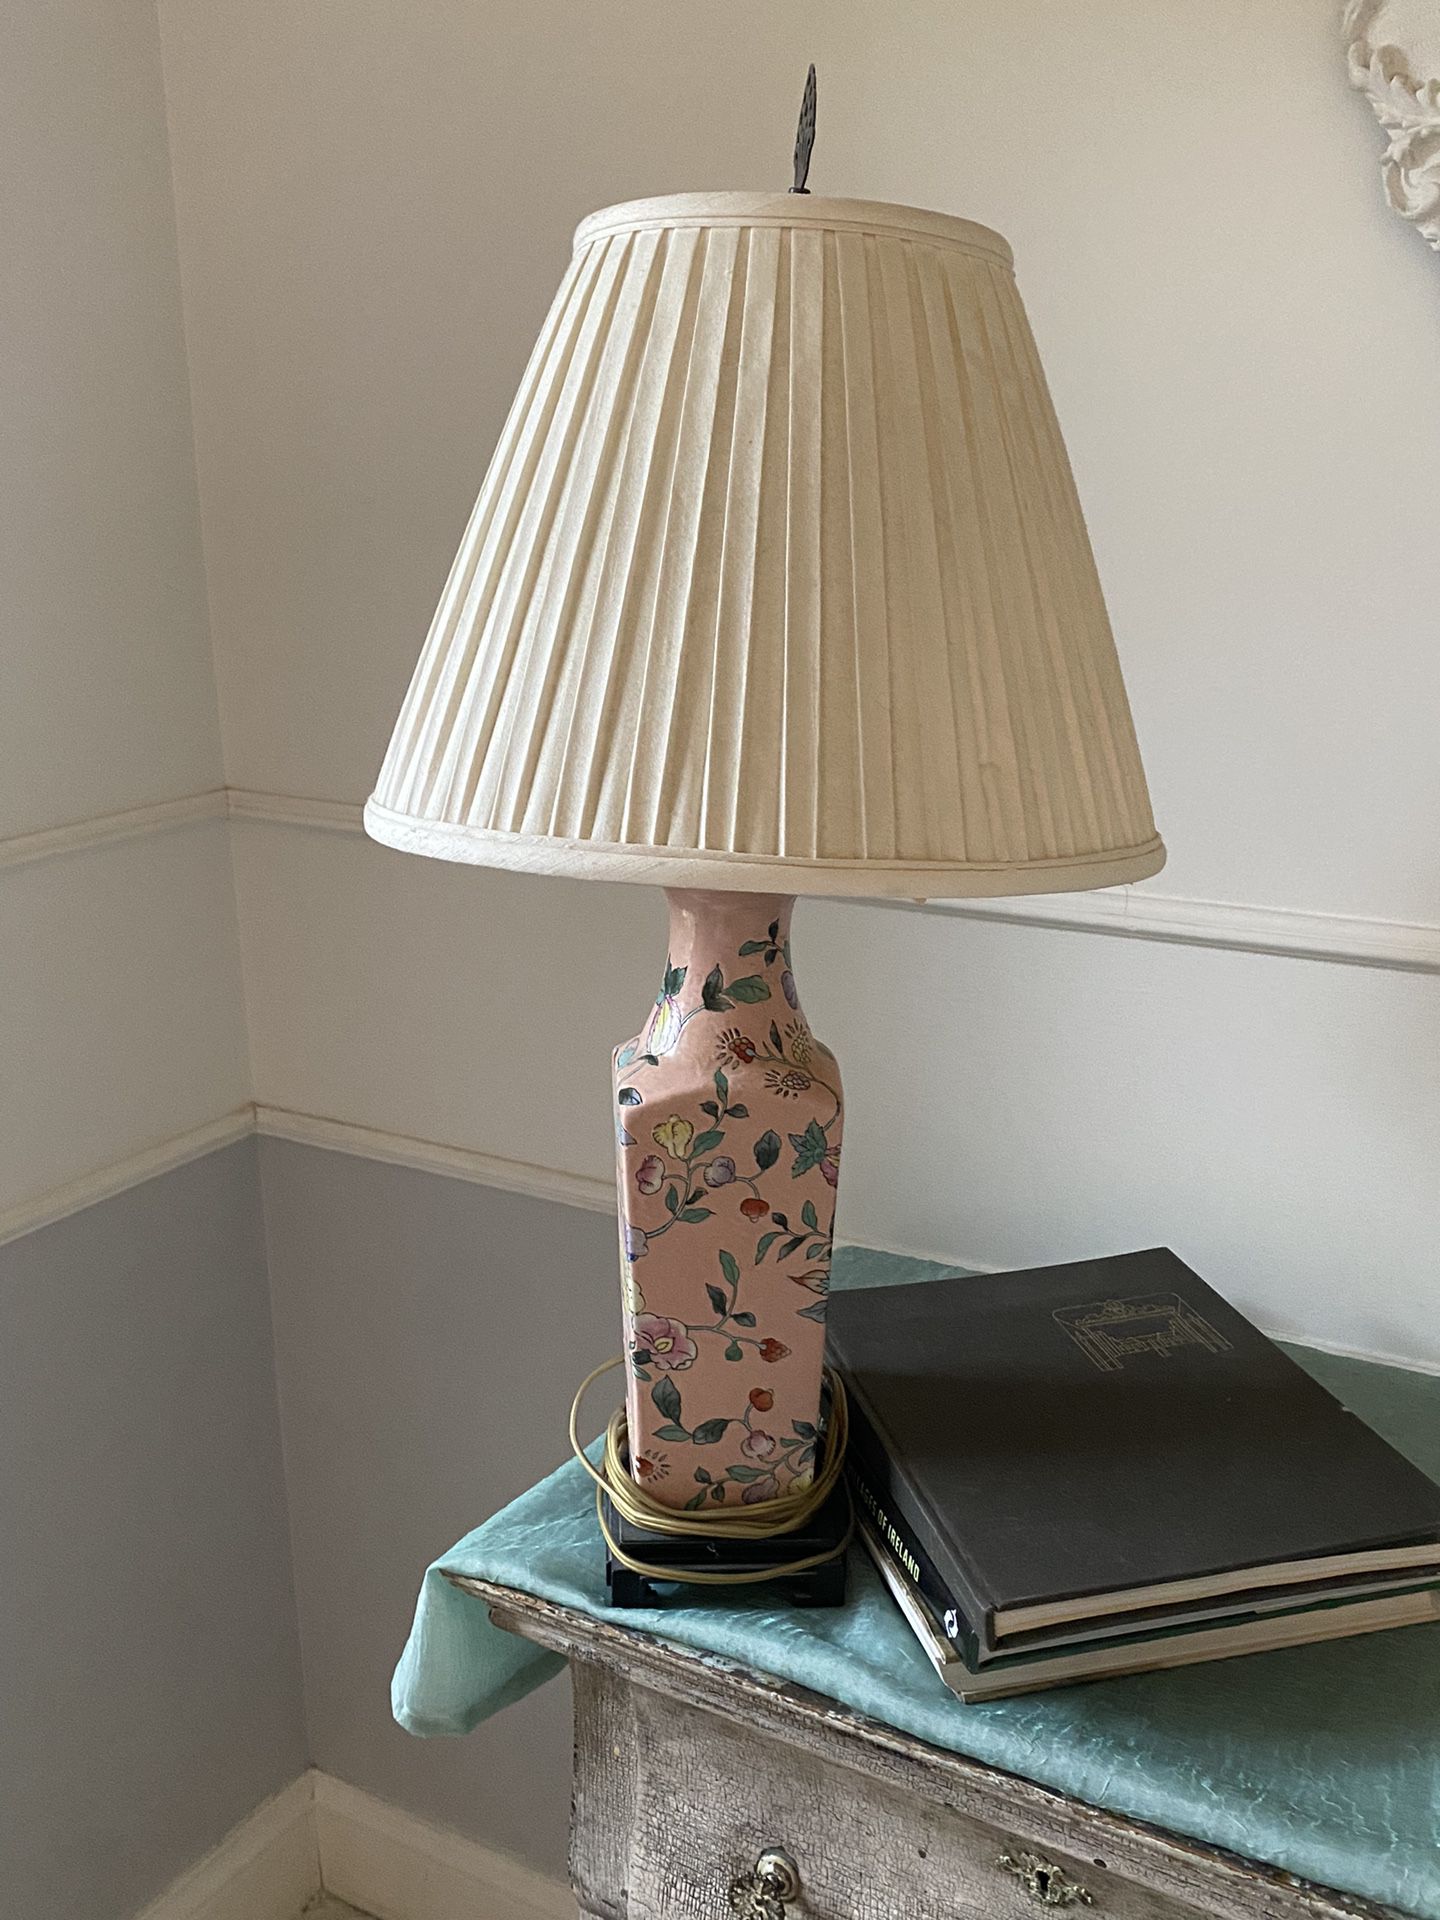 Decorative Table lamp